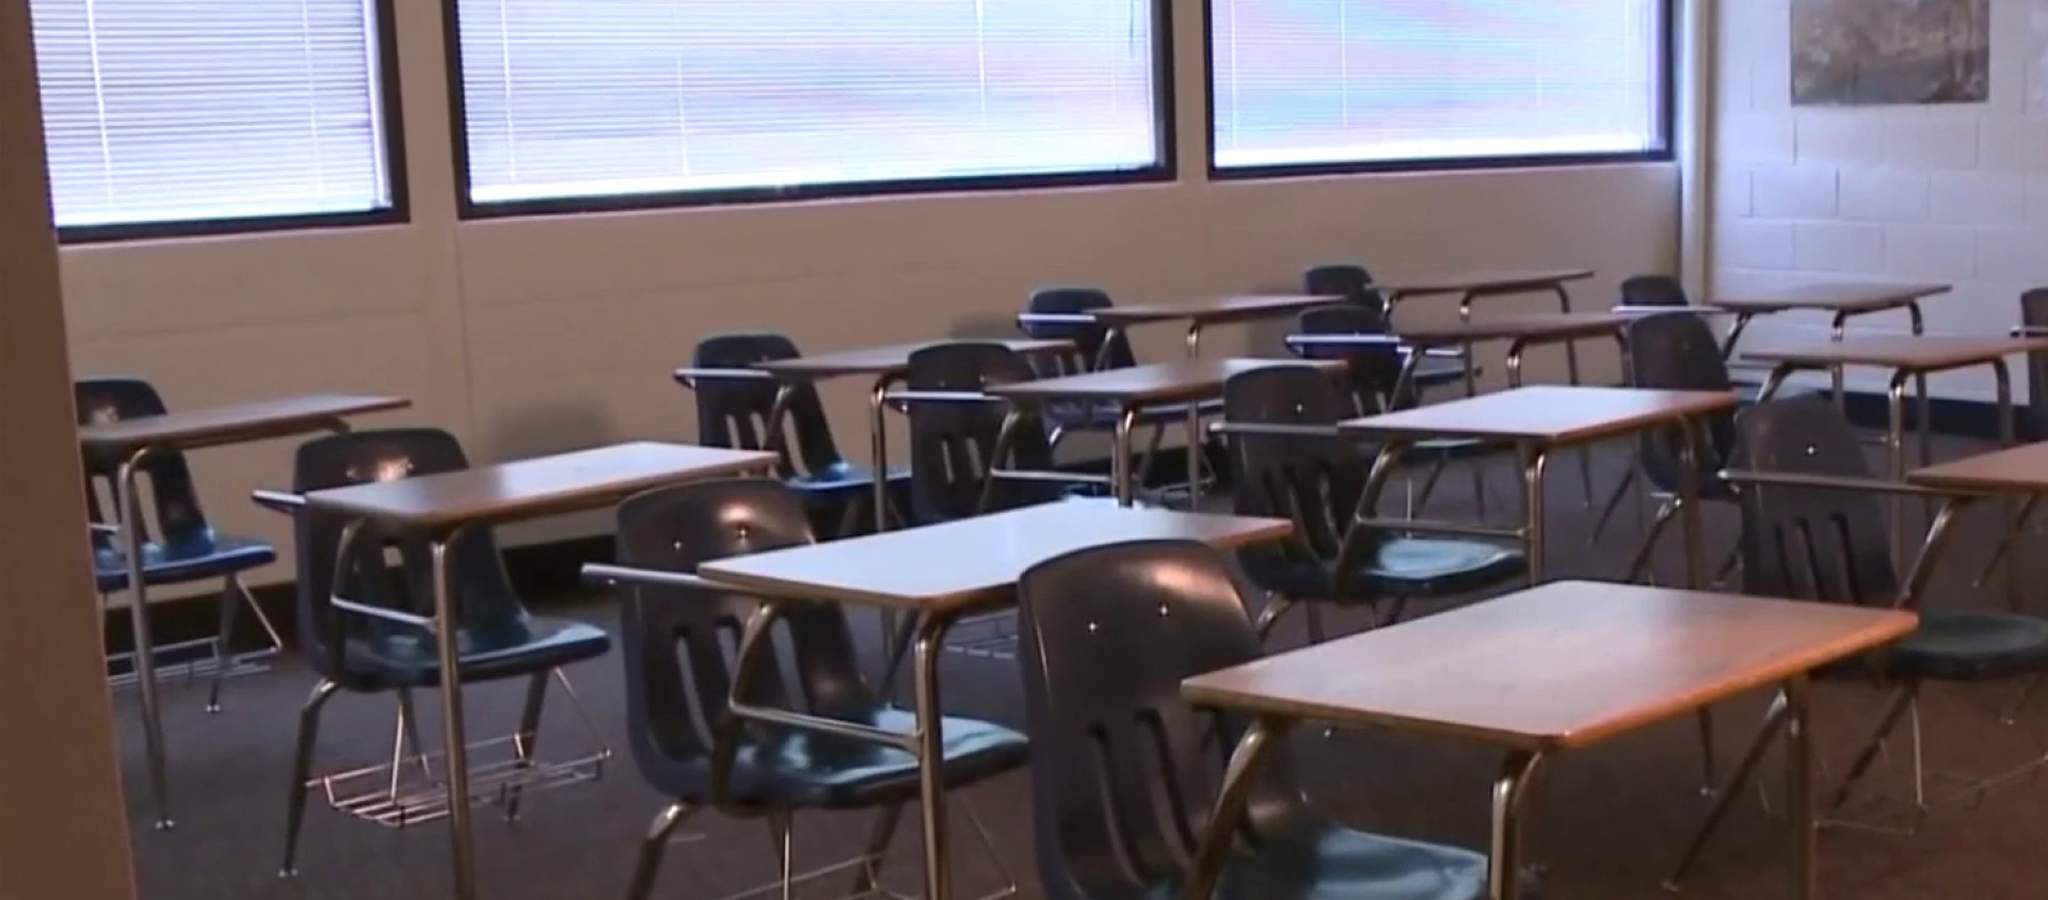 Teachers to get over $10 hourly raise for summer school in Rockbridge County